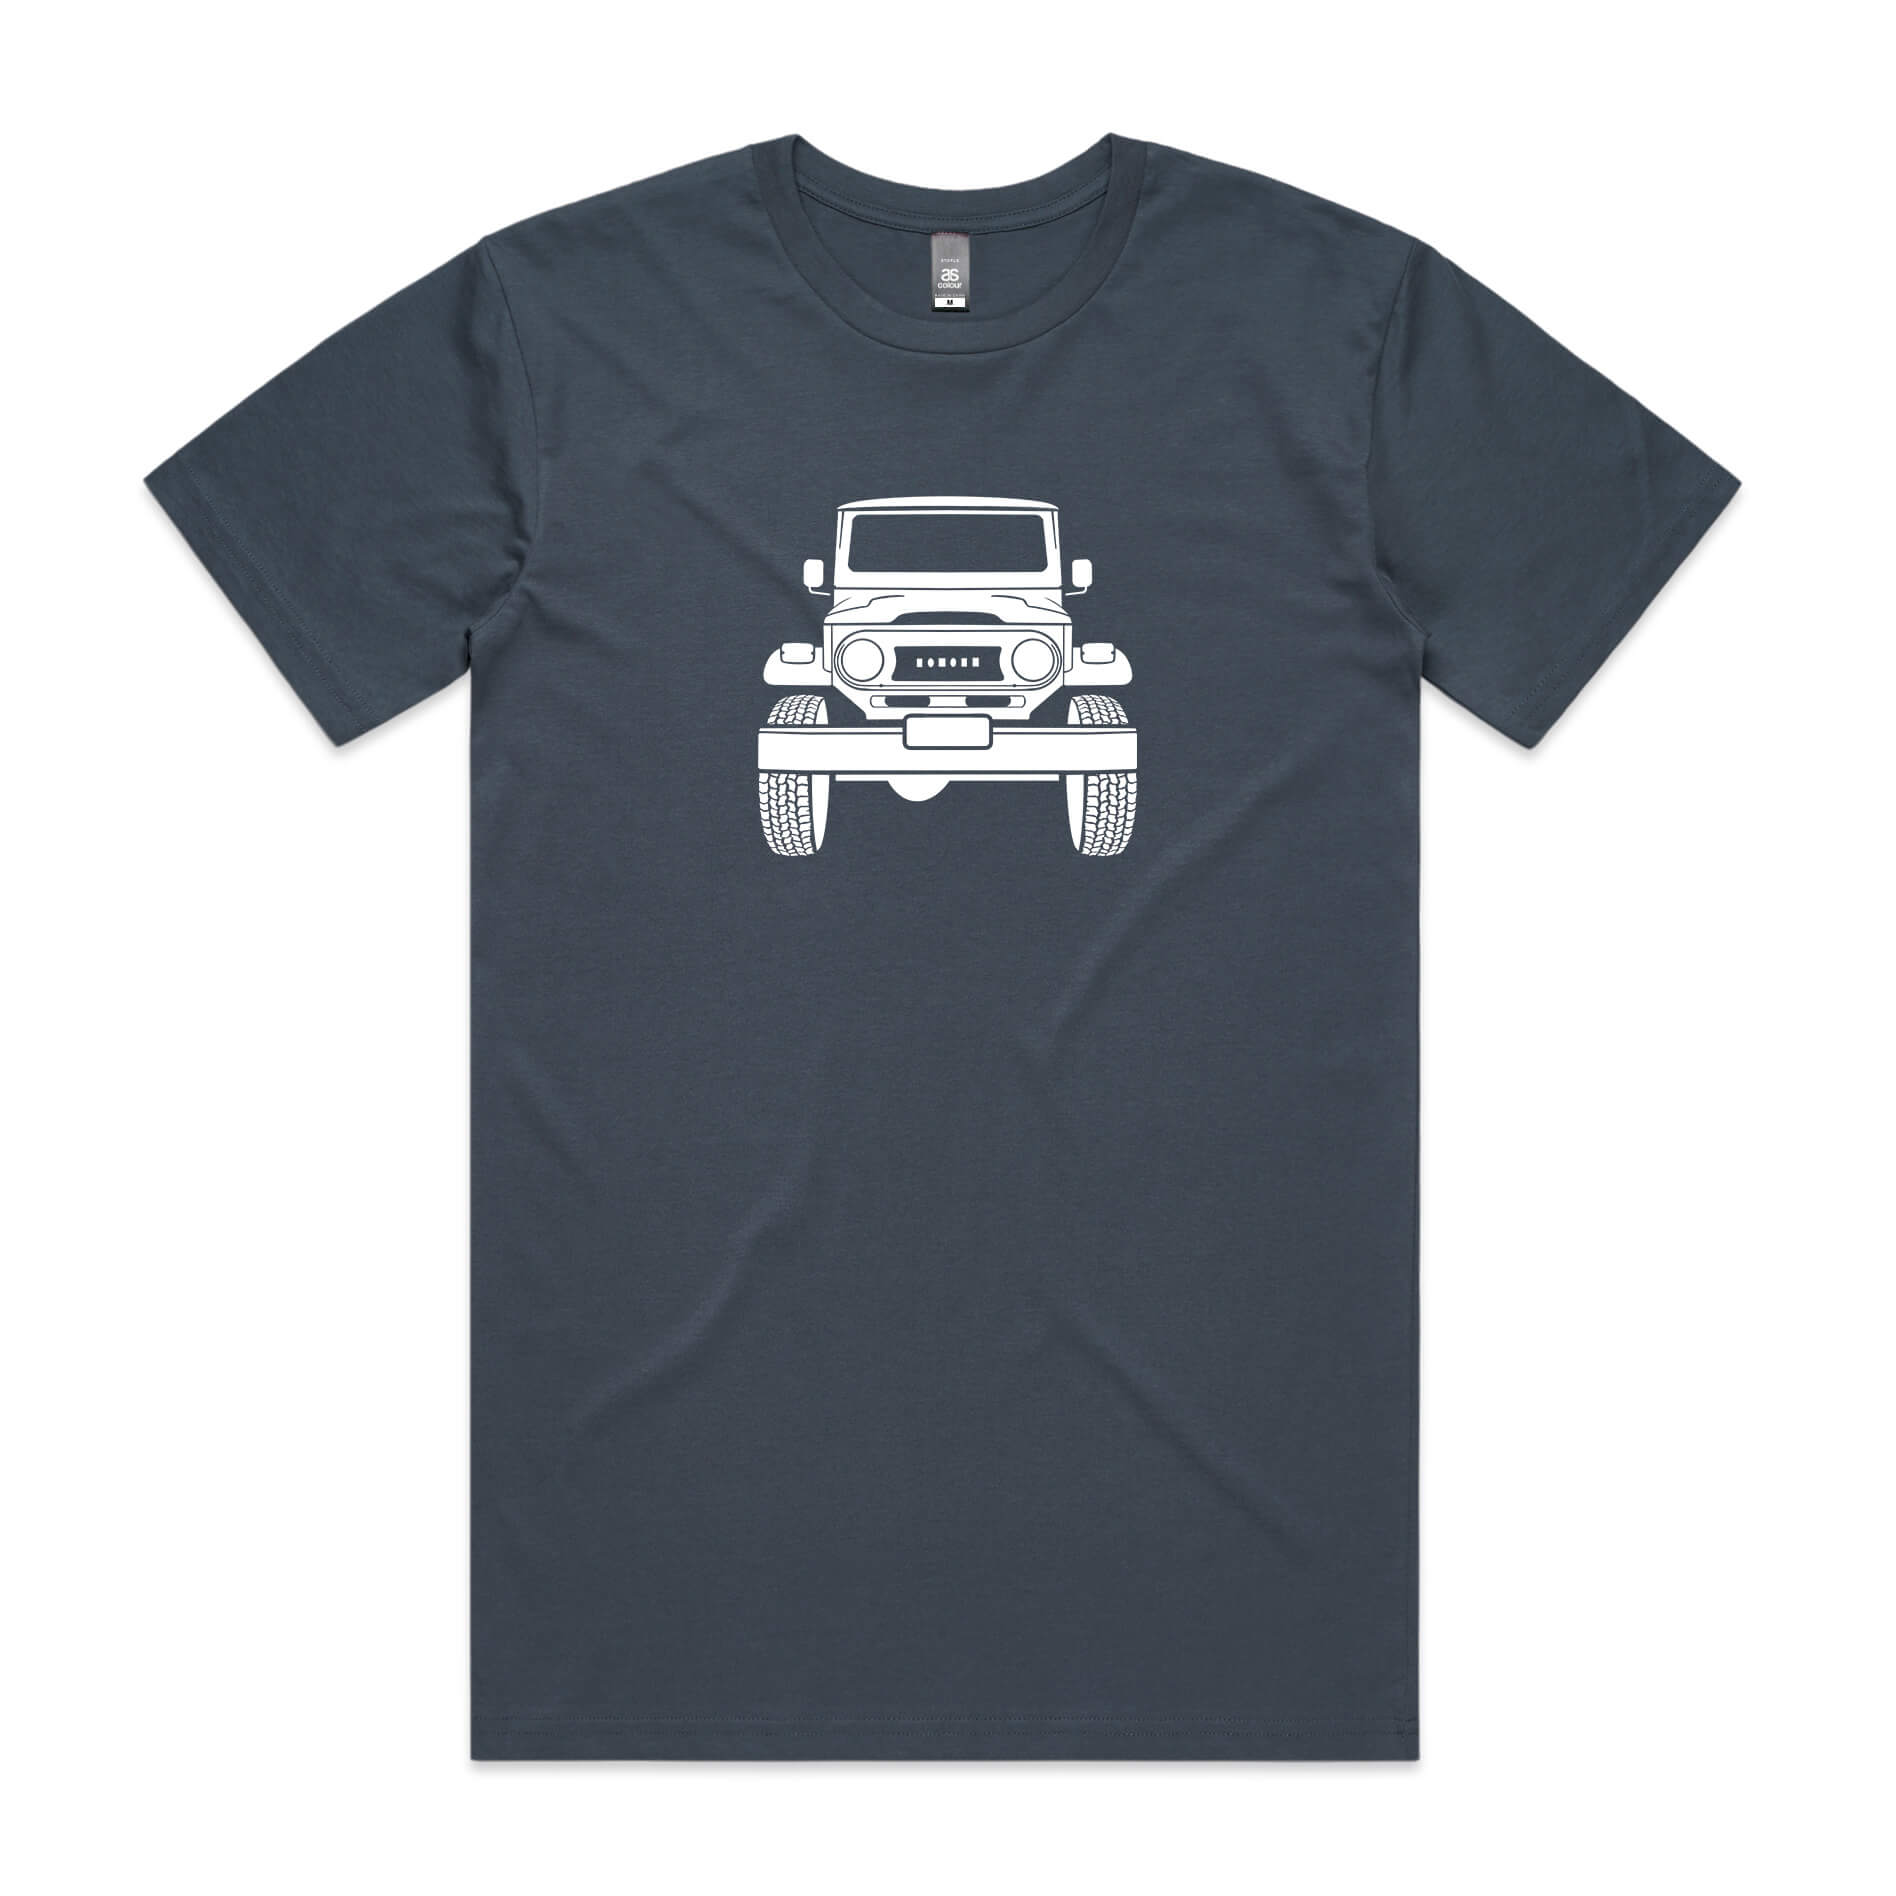 Toyota LandCruiser FJ40 t-shirt in petrol blue